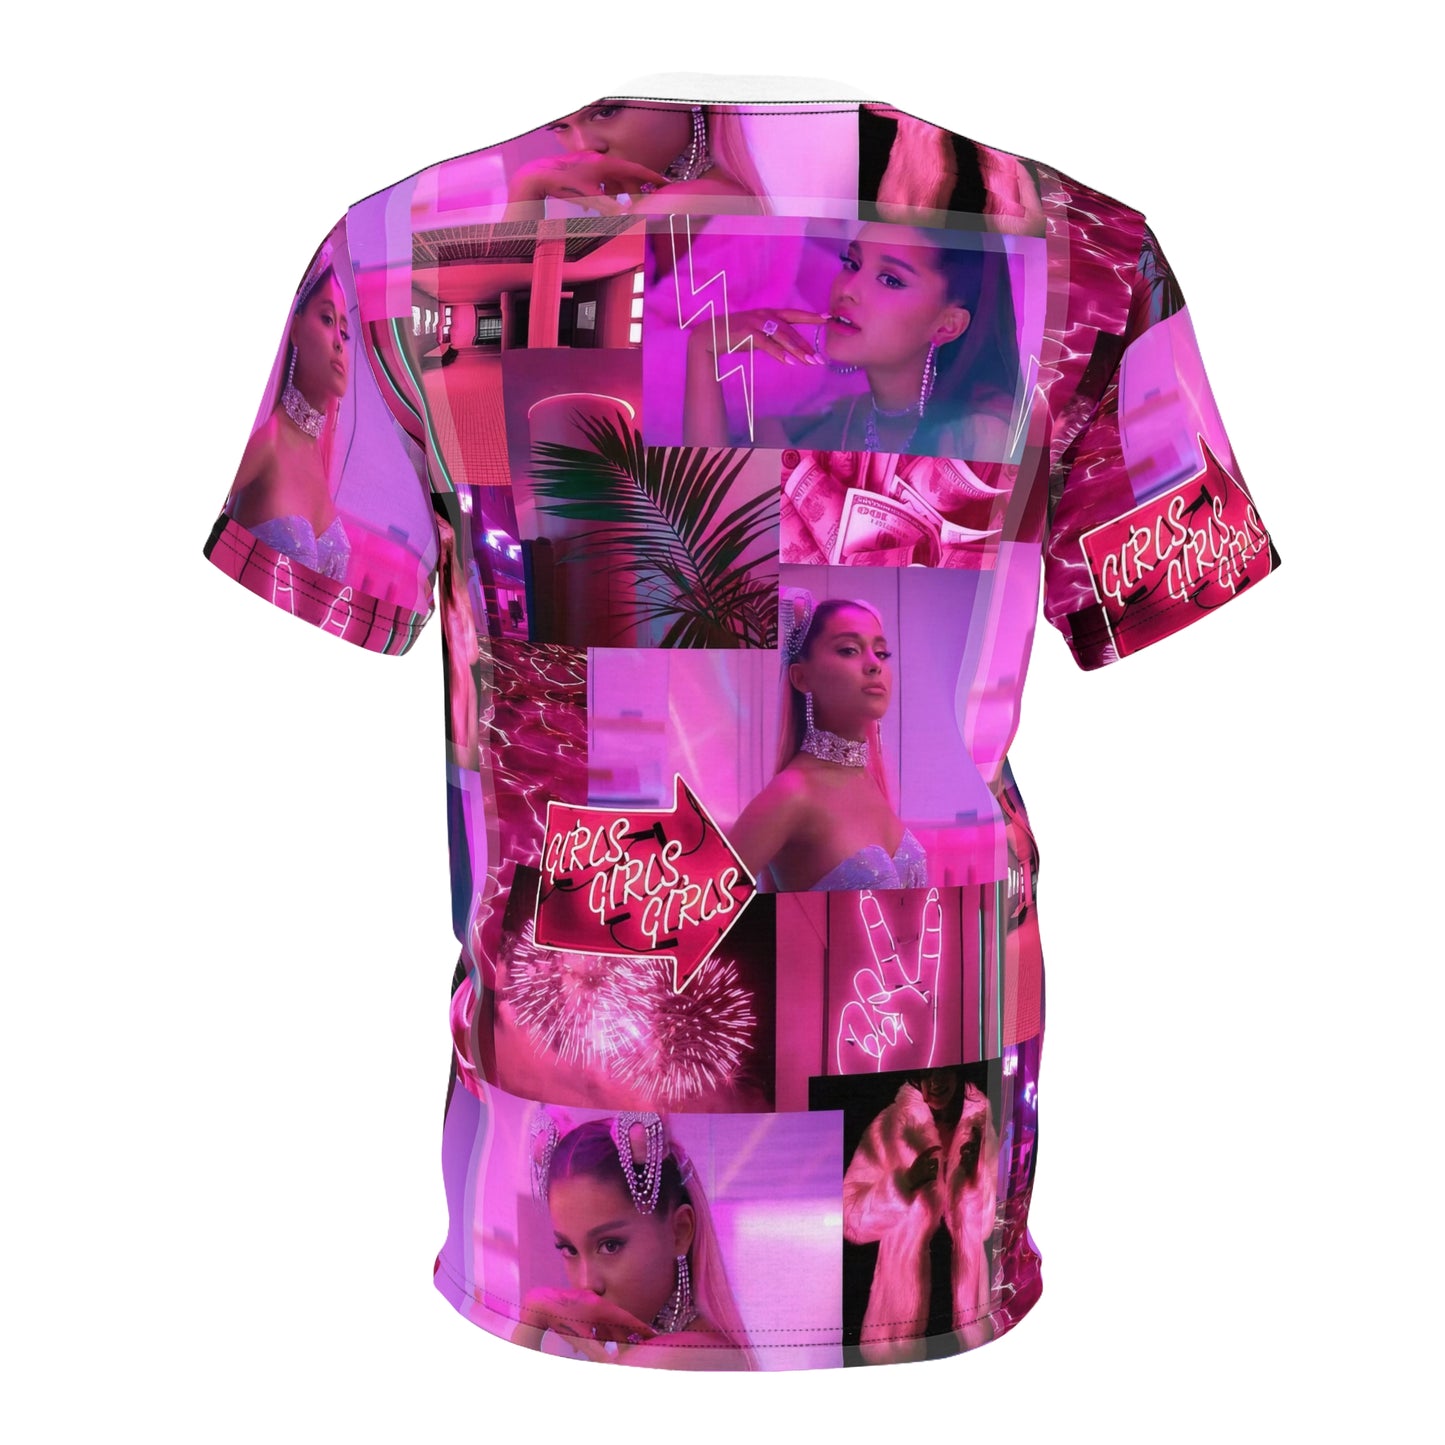 Ariana Grande 7 Rings Collage Unisex Tee Shirt